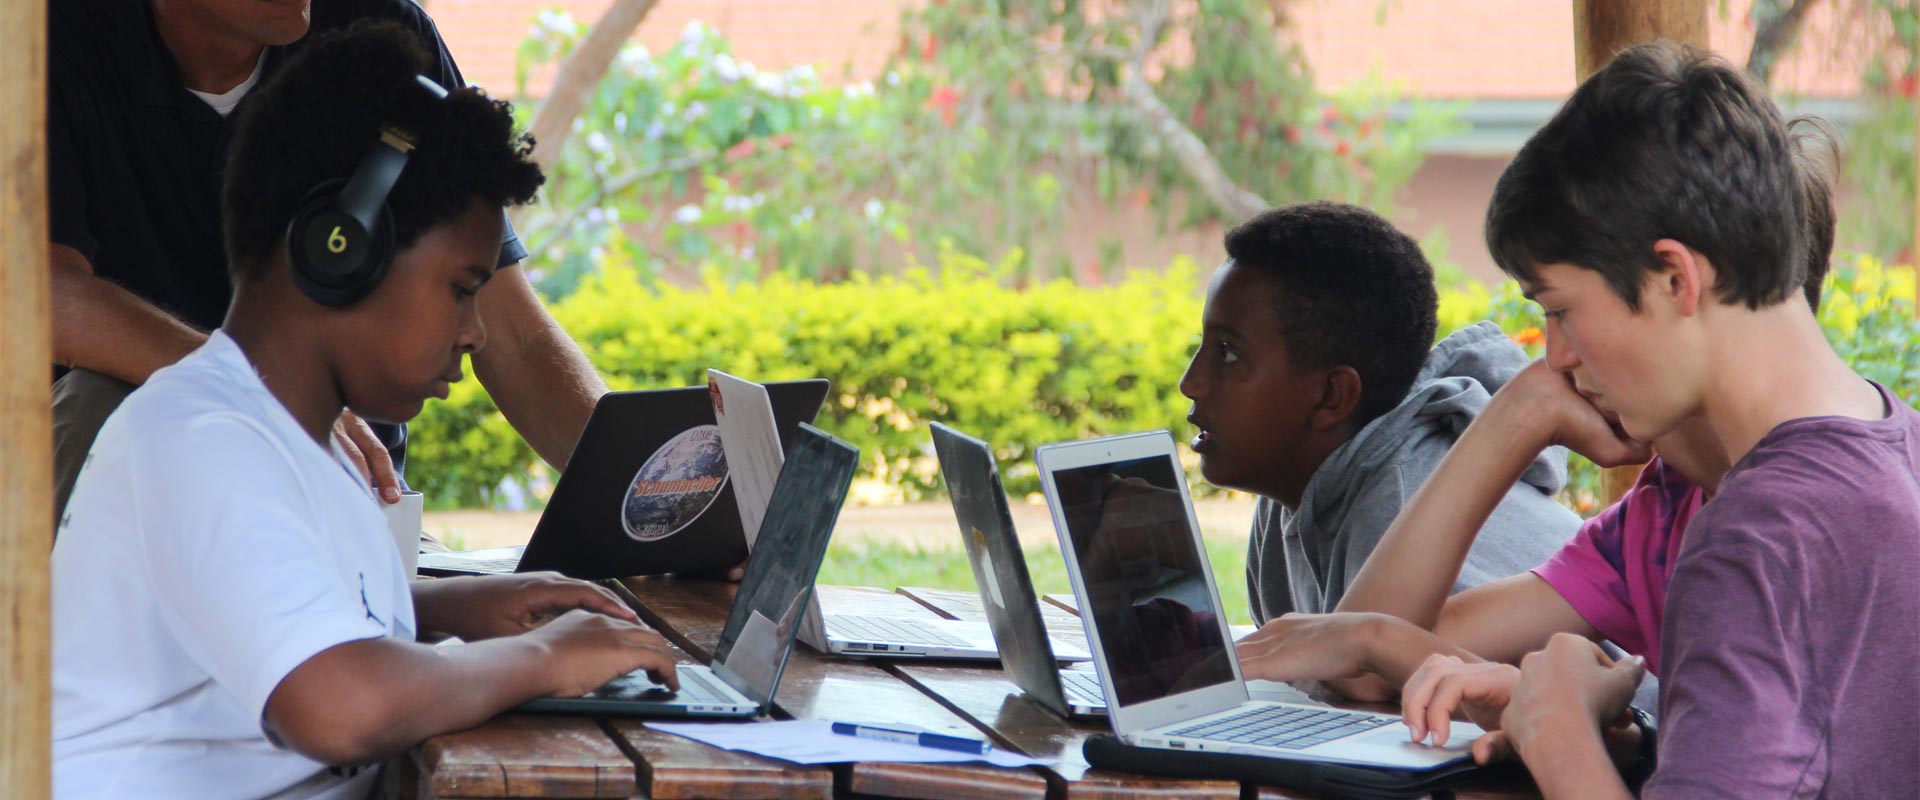 Students working on laptops at the International School of Uganda